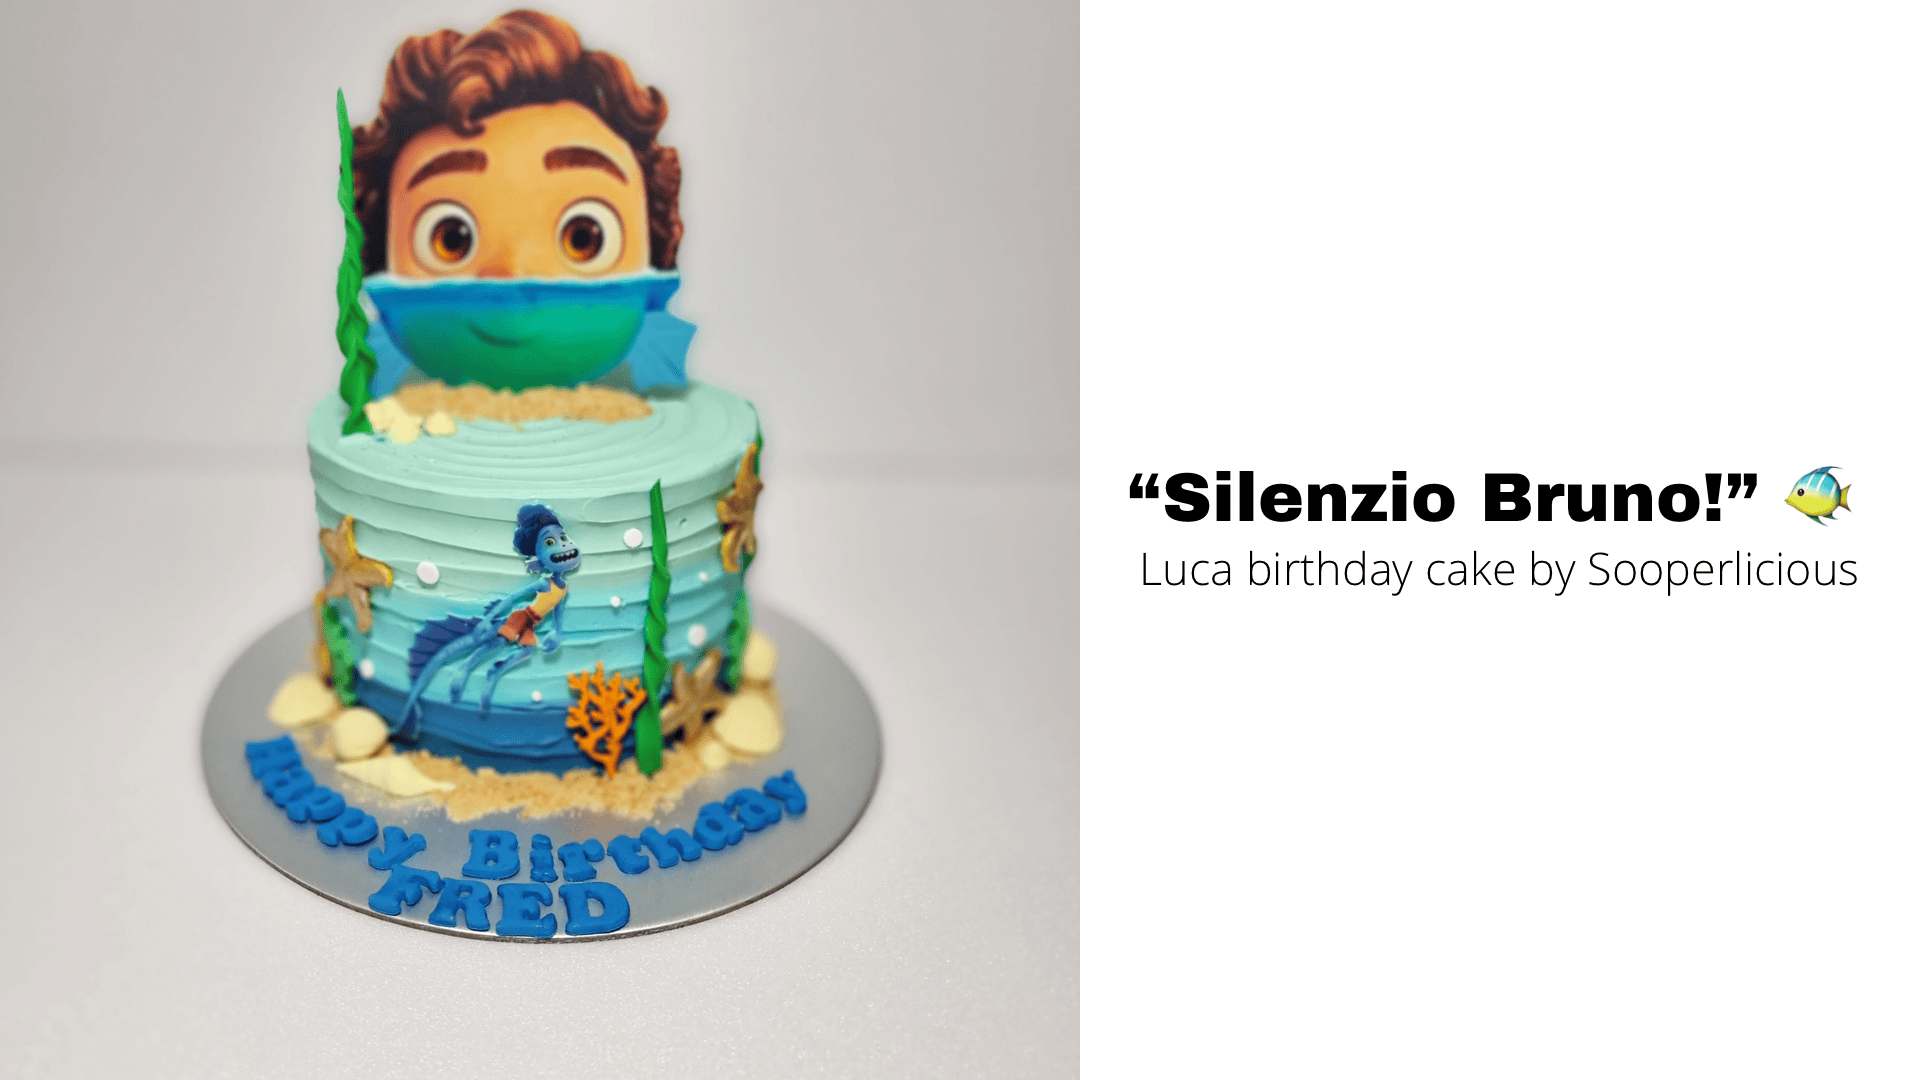 Silenzio Bruno!” 🐠 — Luca birthday cake by Sooperlicious